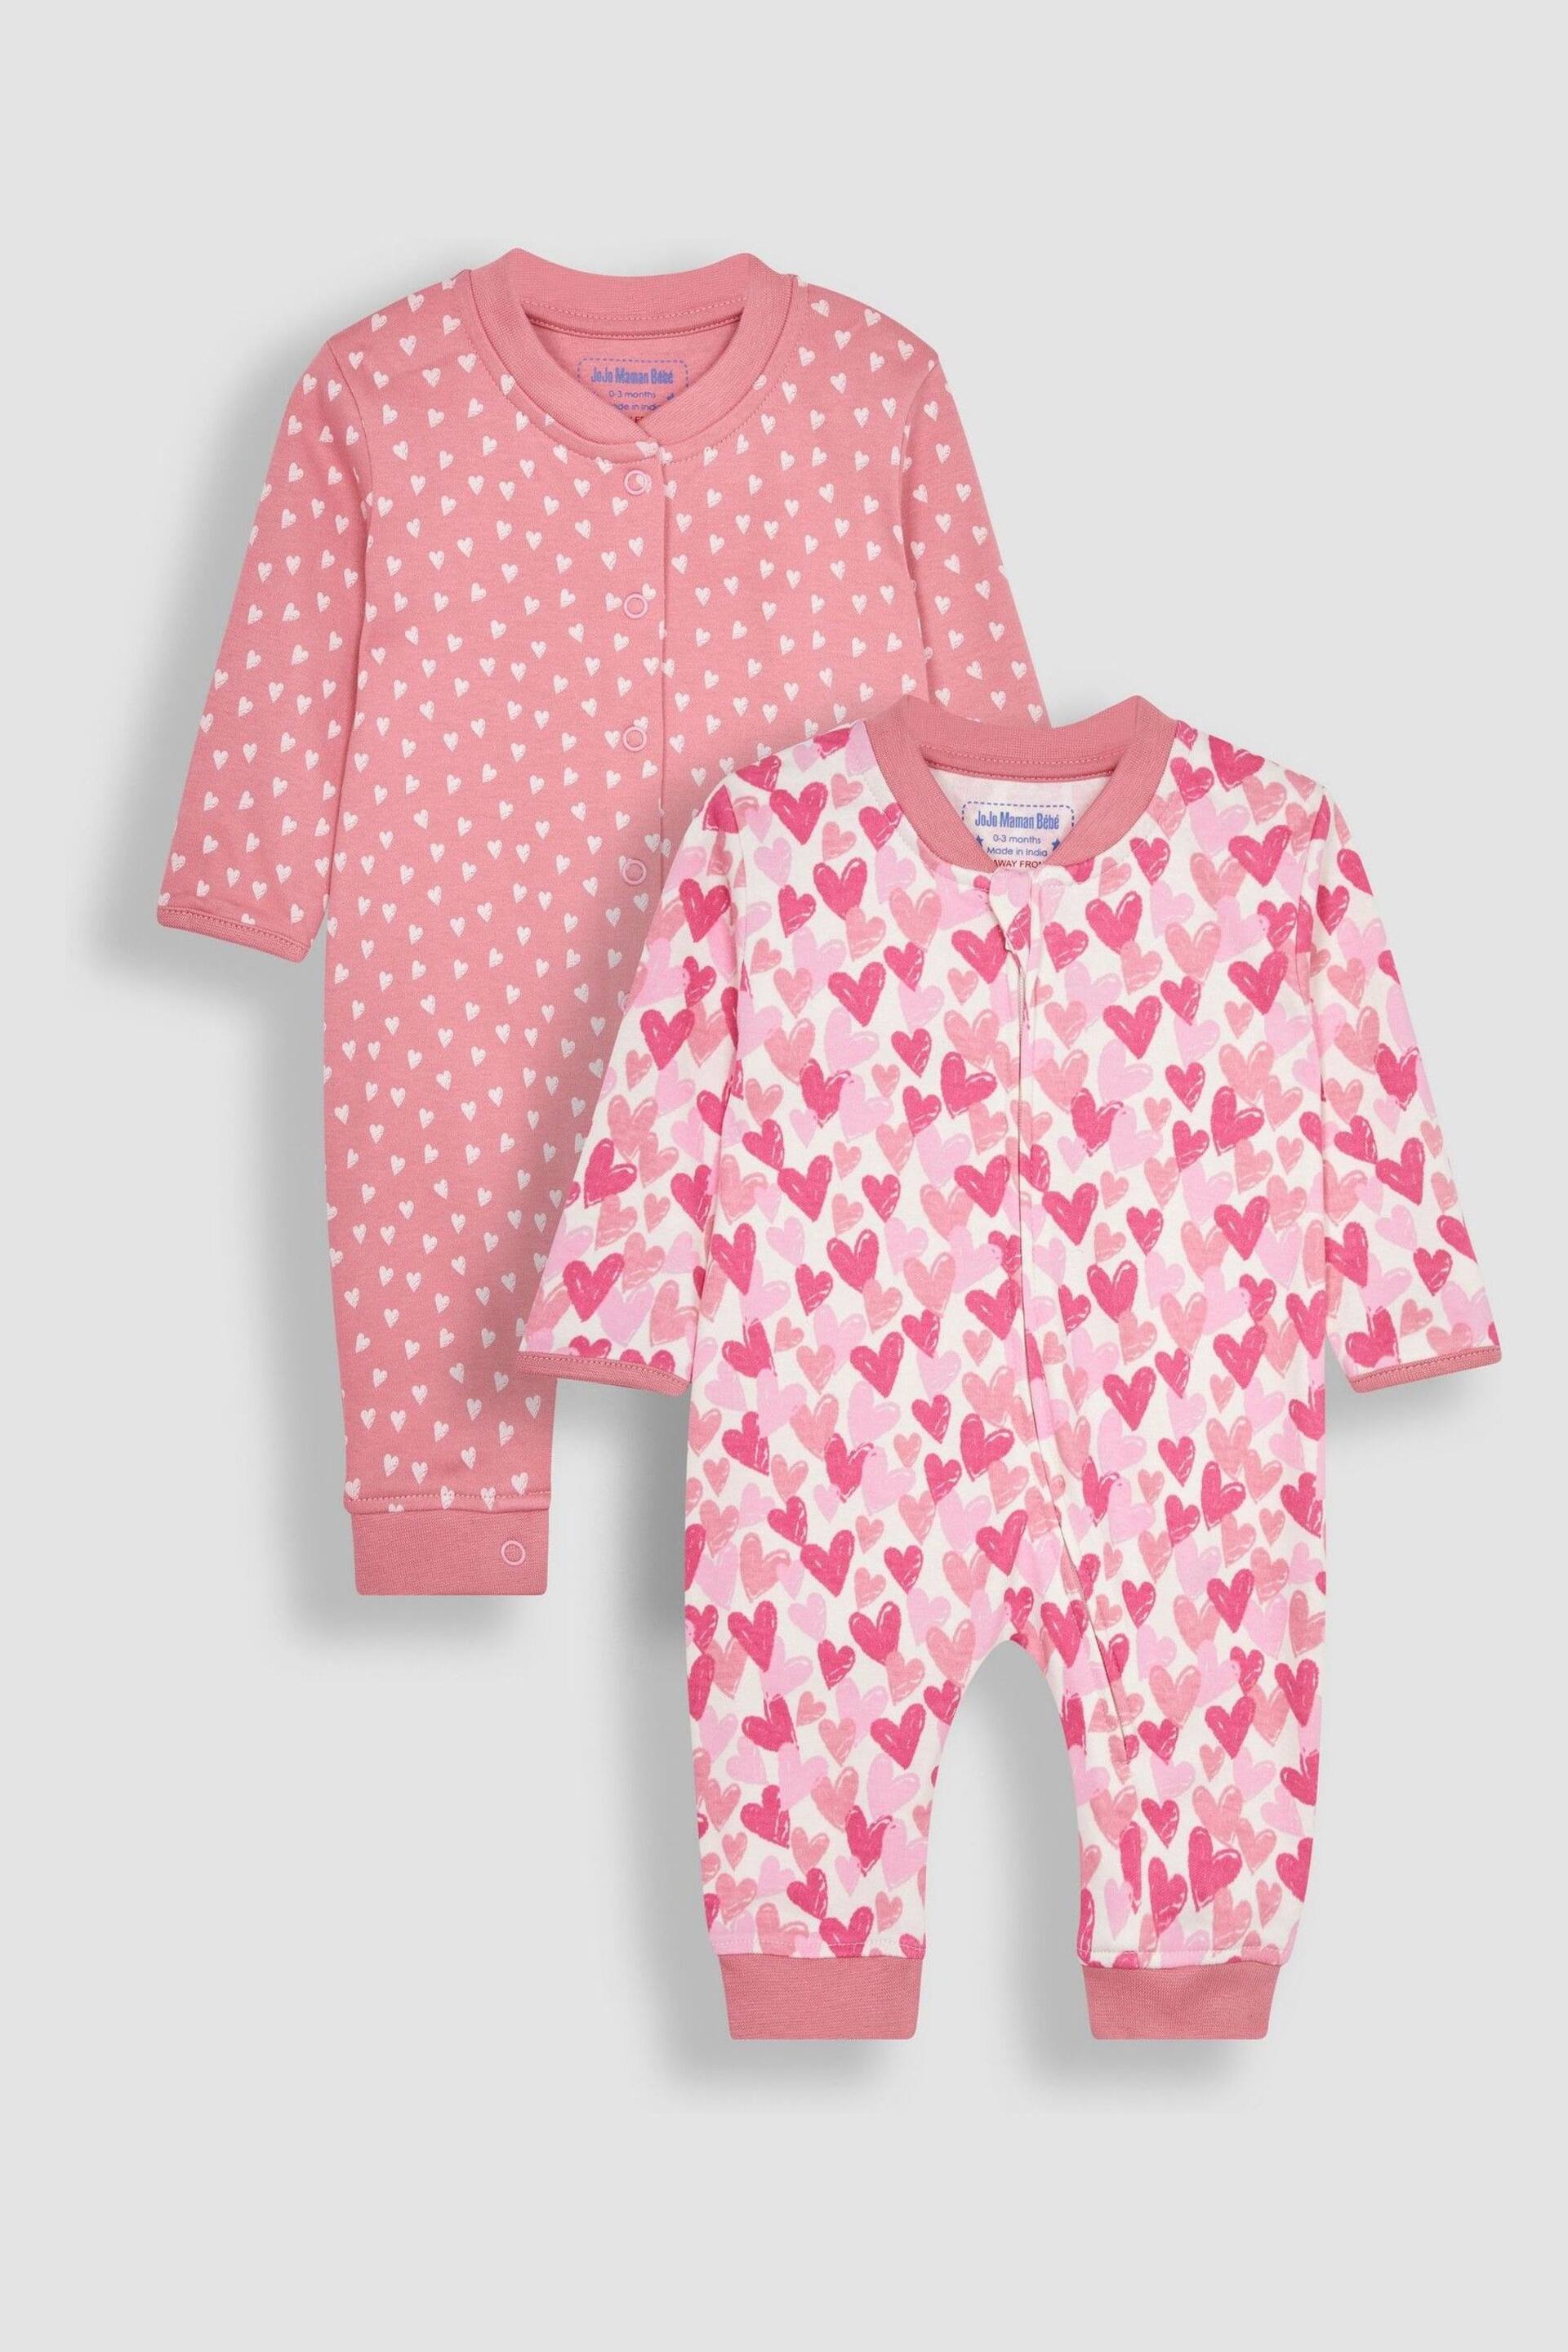 JoJo Maman Bébé Pink Heart 2-Pack Footless Sleepsuits - Image 2 of 5